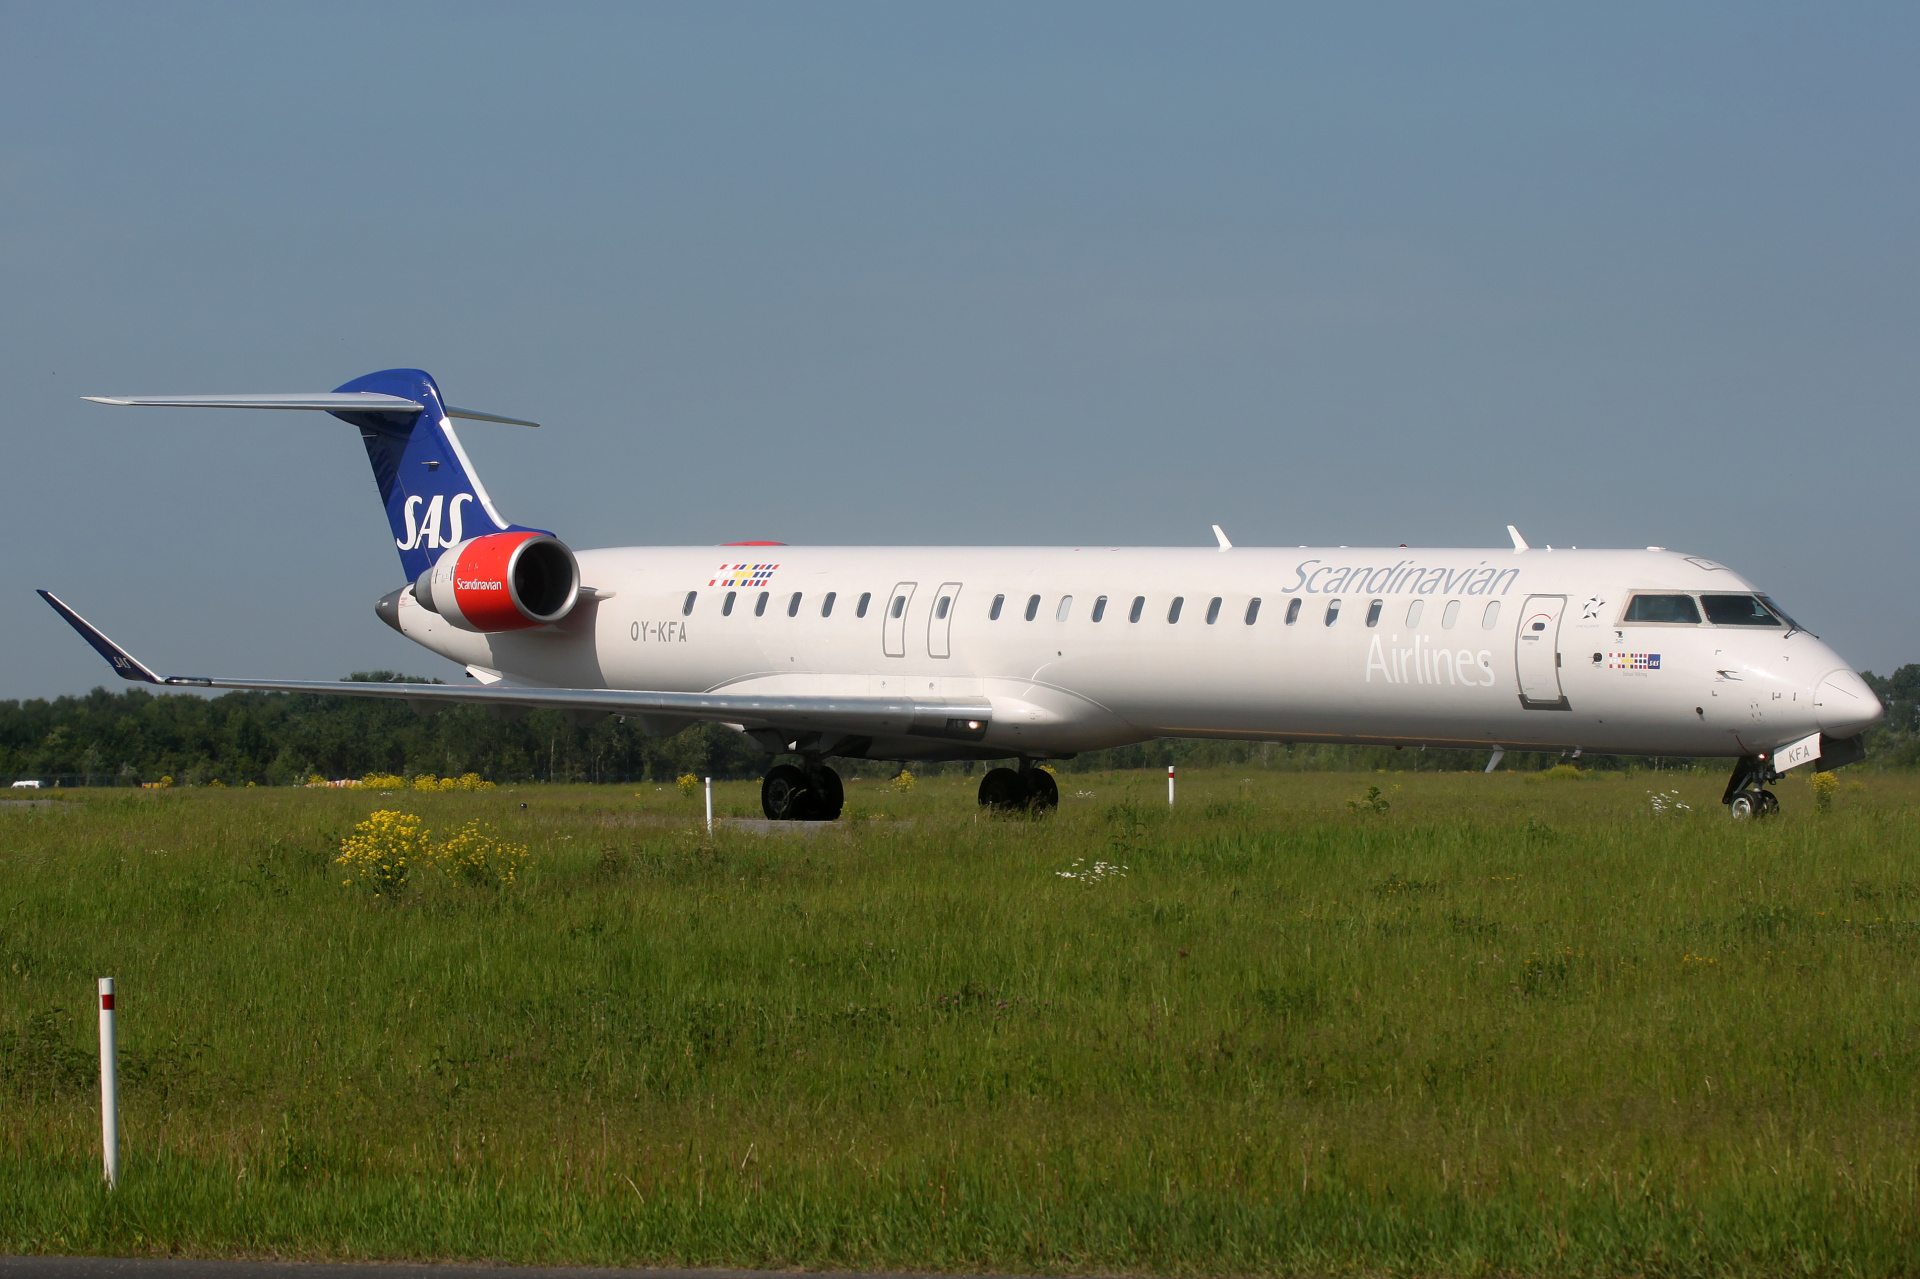 OY-KFA (Aircraft » EPWA Spotting » Mitsubishi Regional Jet » CRJ-900 » SAS Scandinavian Airlines)